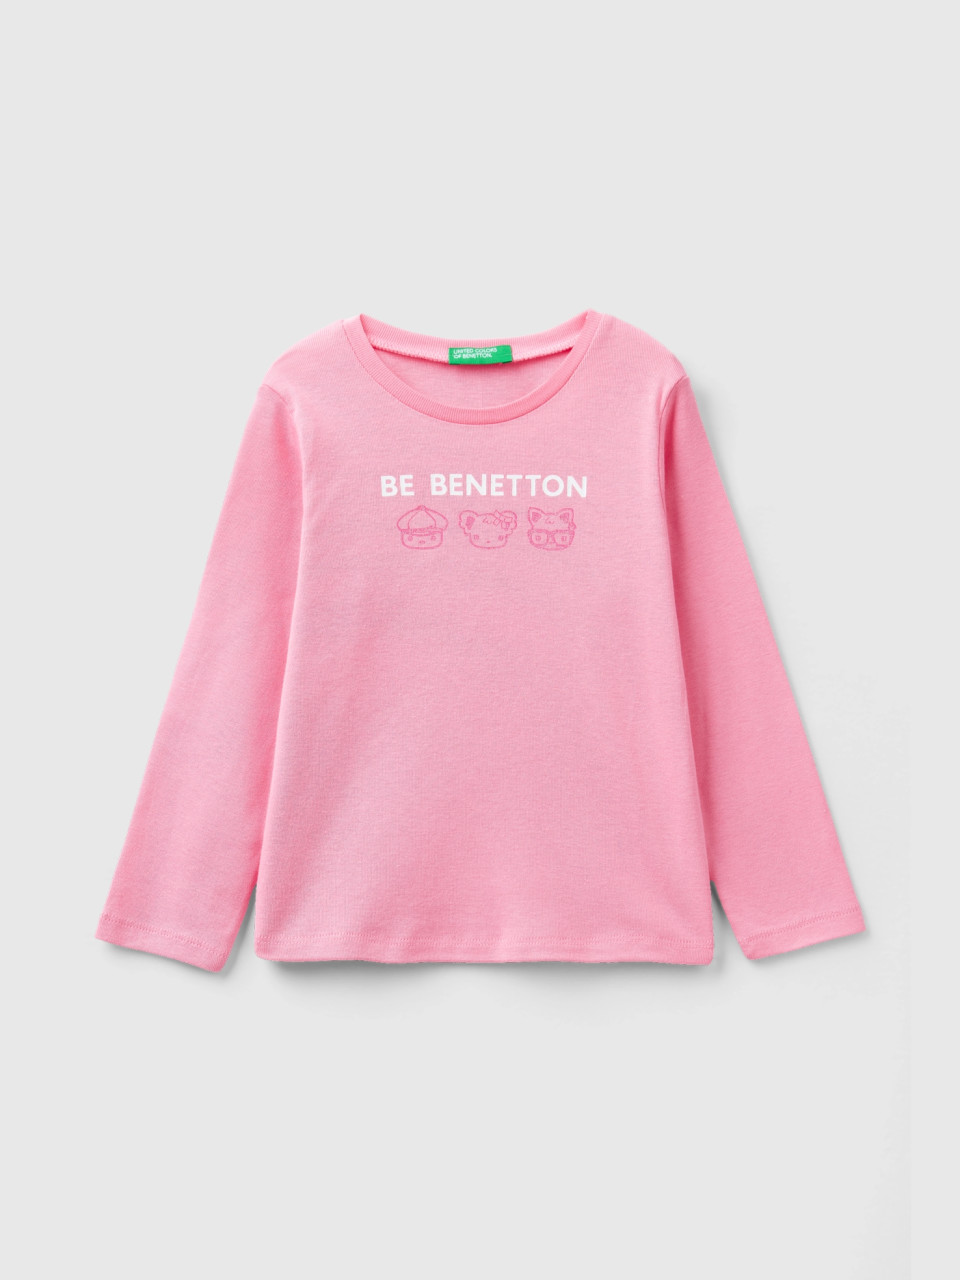 Benetton, T-shirt Manica Lunga Con Stampa Glitter, Rosa, Bambini